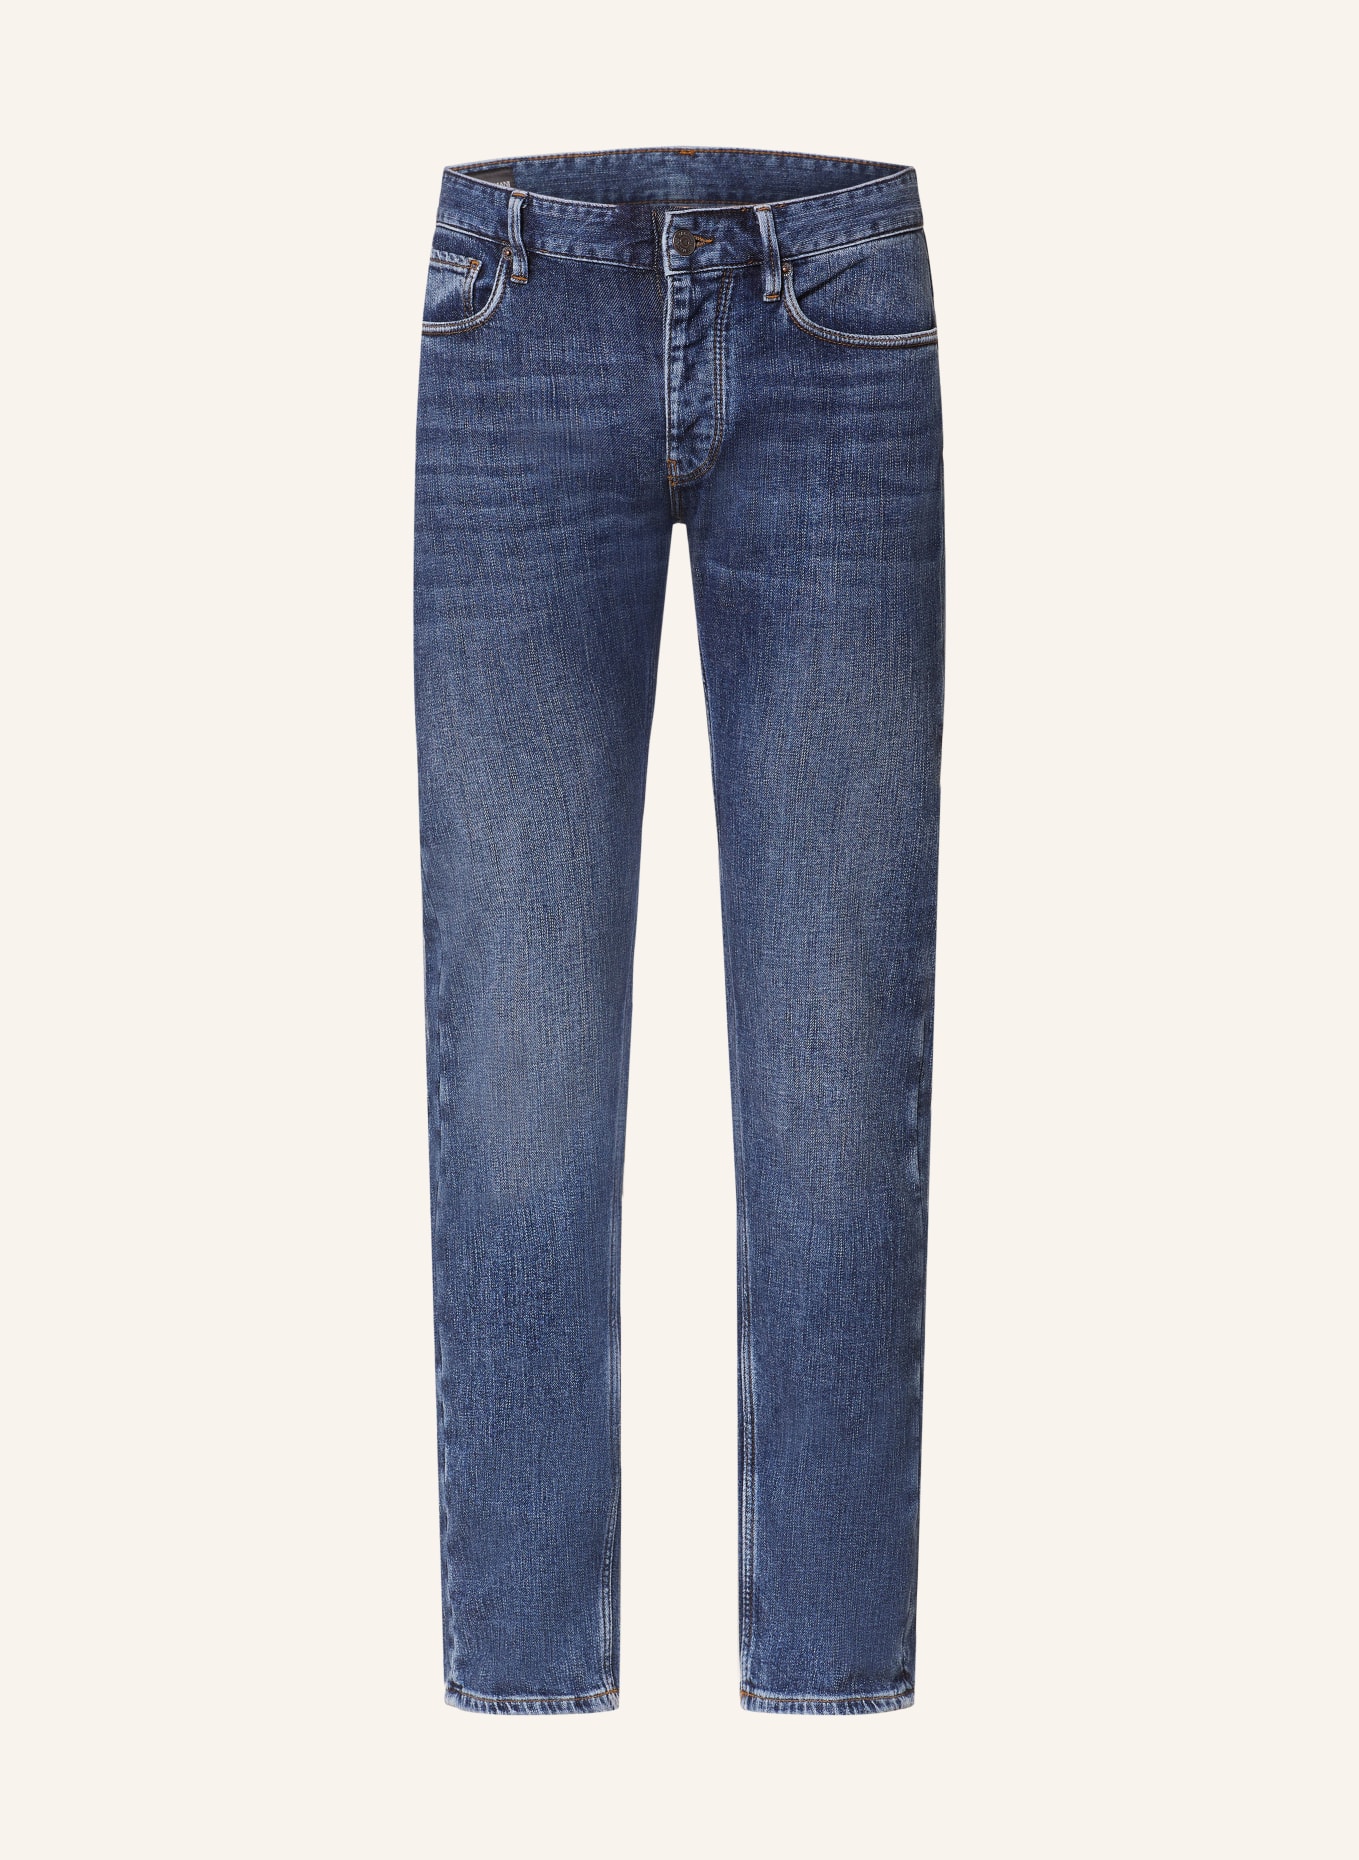 EMPORIO ARMANI Jeans J75 Slim Fit, Farbe: 0942 DENIM BLU MD (Bild 1)